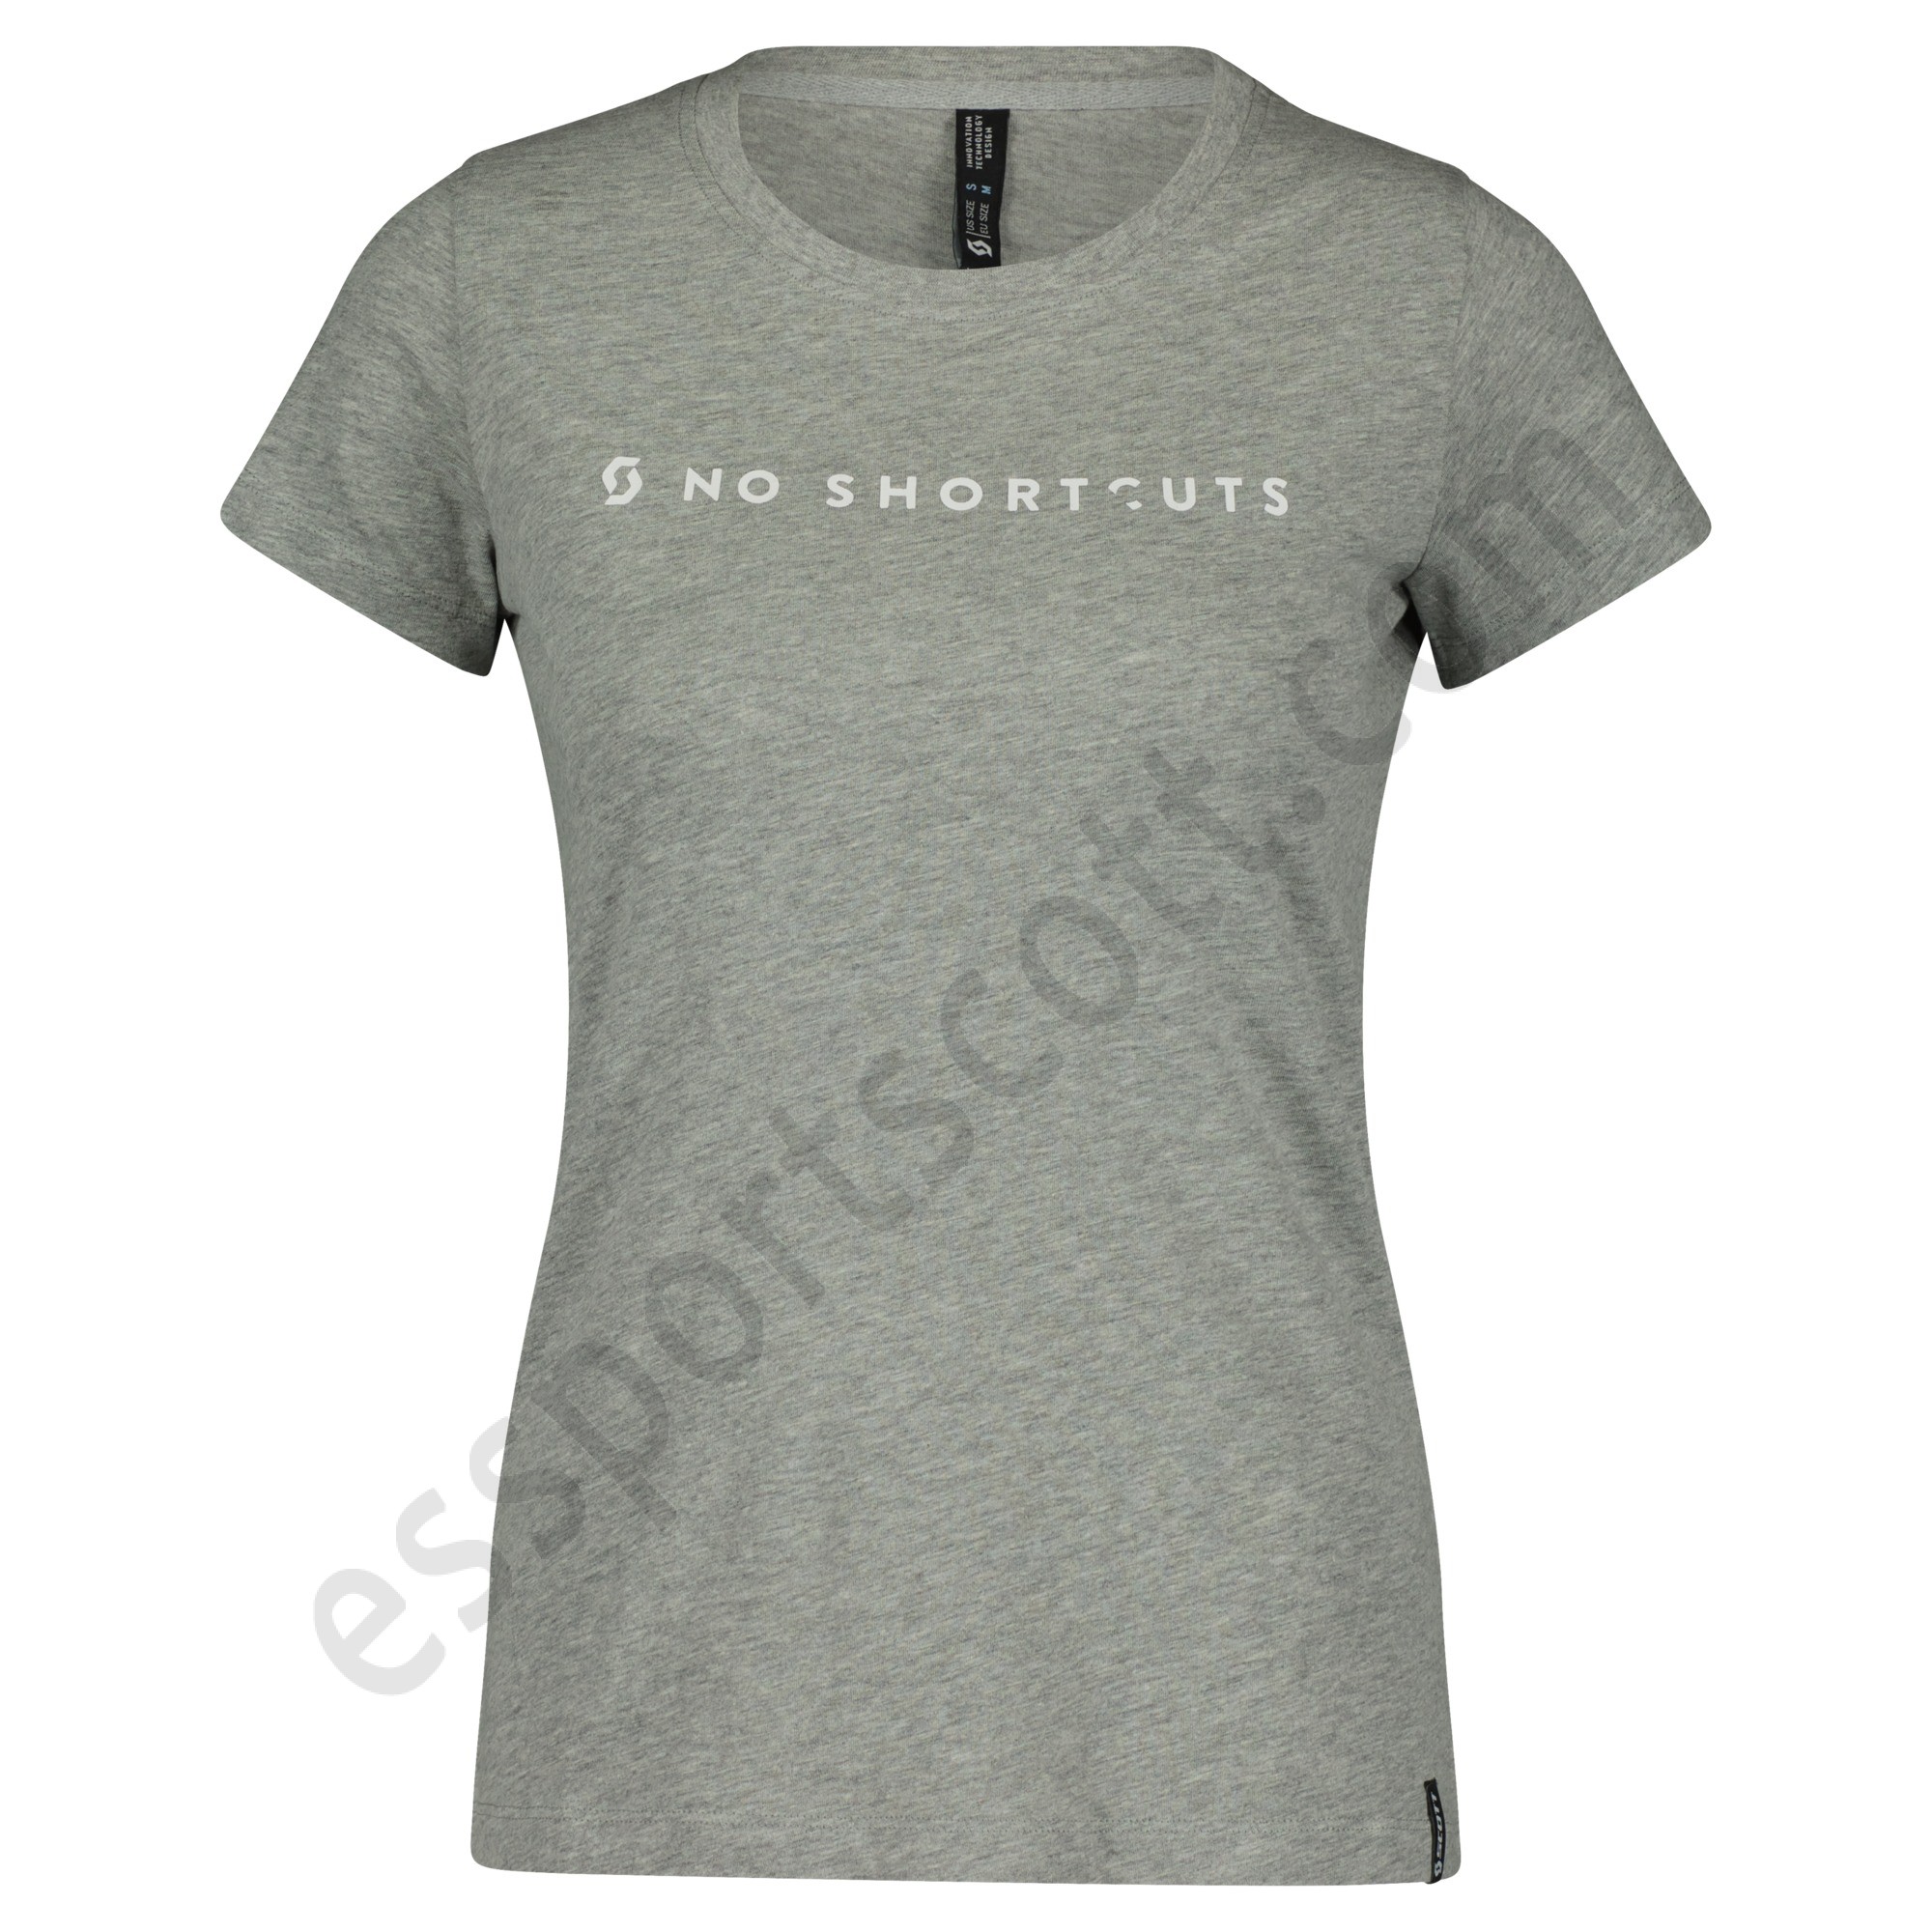 Scott Tienda ◇ Camiseta de manga corta para mujer No Shortcuts - Scott Tienda ◇ Camiseta de manga corta para mujer No Shortcuts